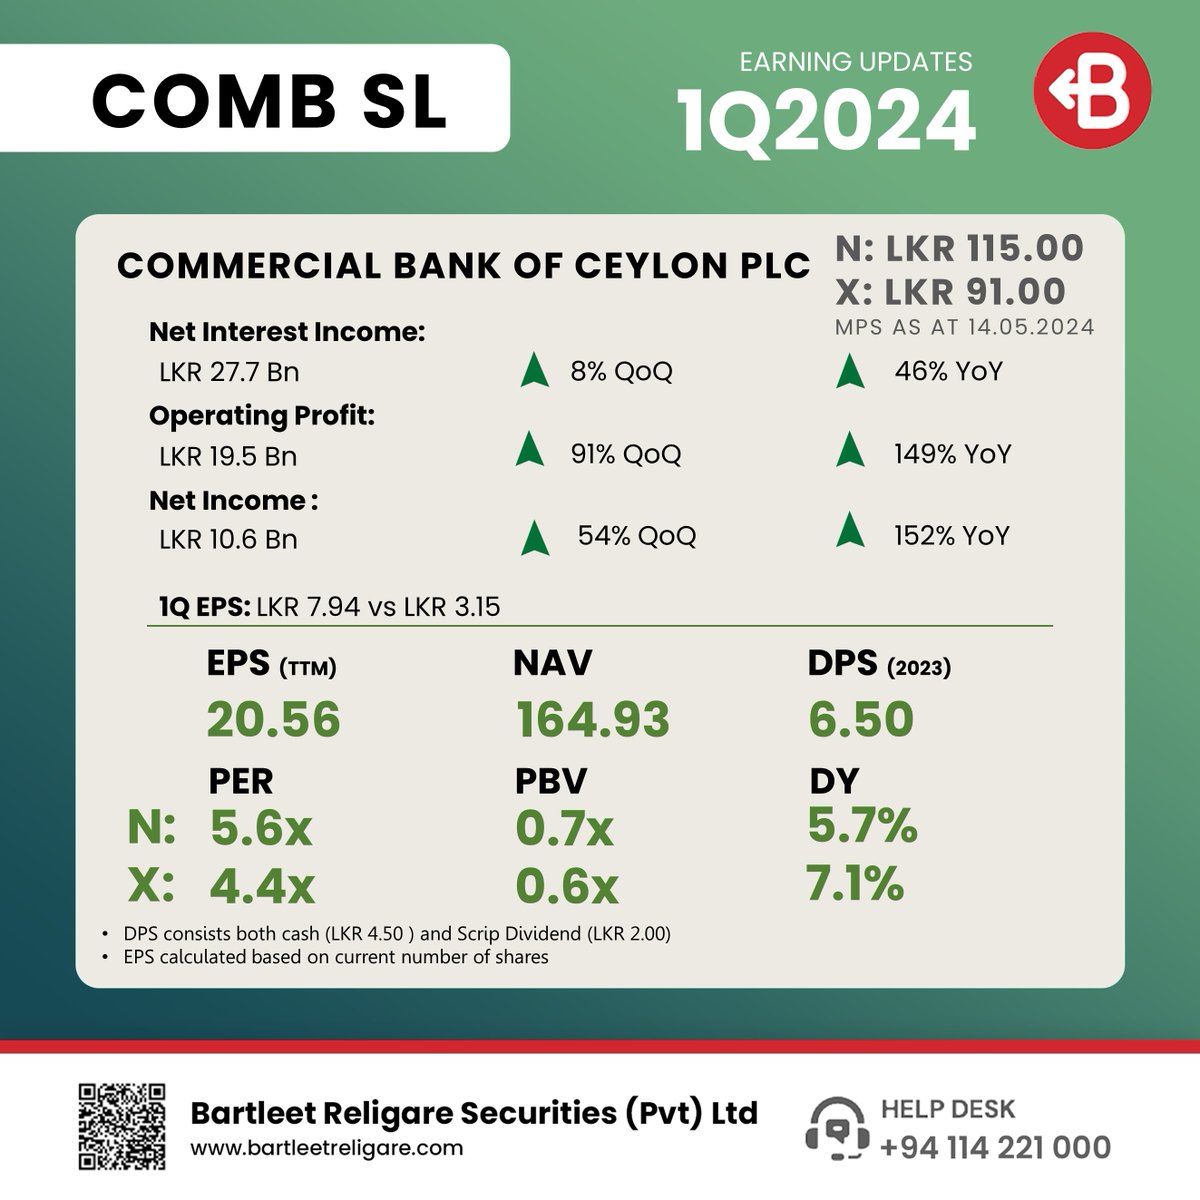 COMMERCIAL BANK OF CEYLON PLC presents its 1Q 2024 interim financials.
   
Link to access interim financials: cdn.cse.lk/cmt/upload_rep…
 
#BRS #Earnings #COMBSL